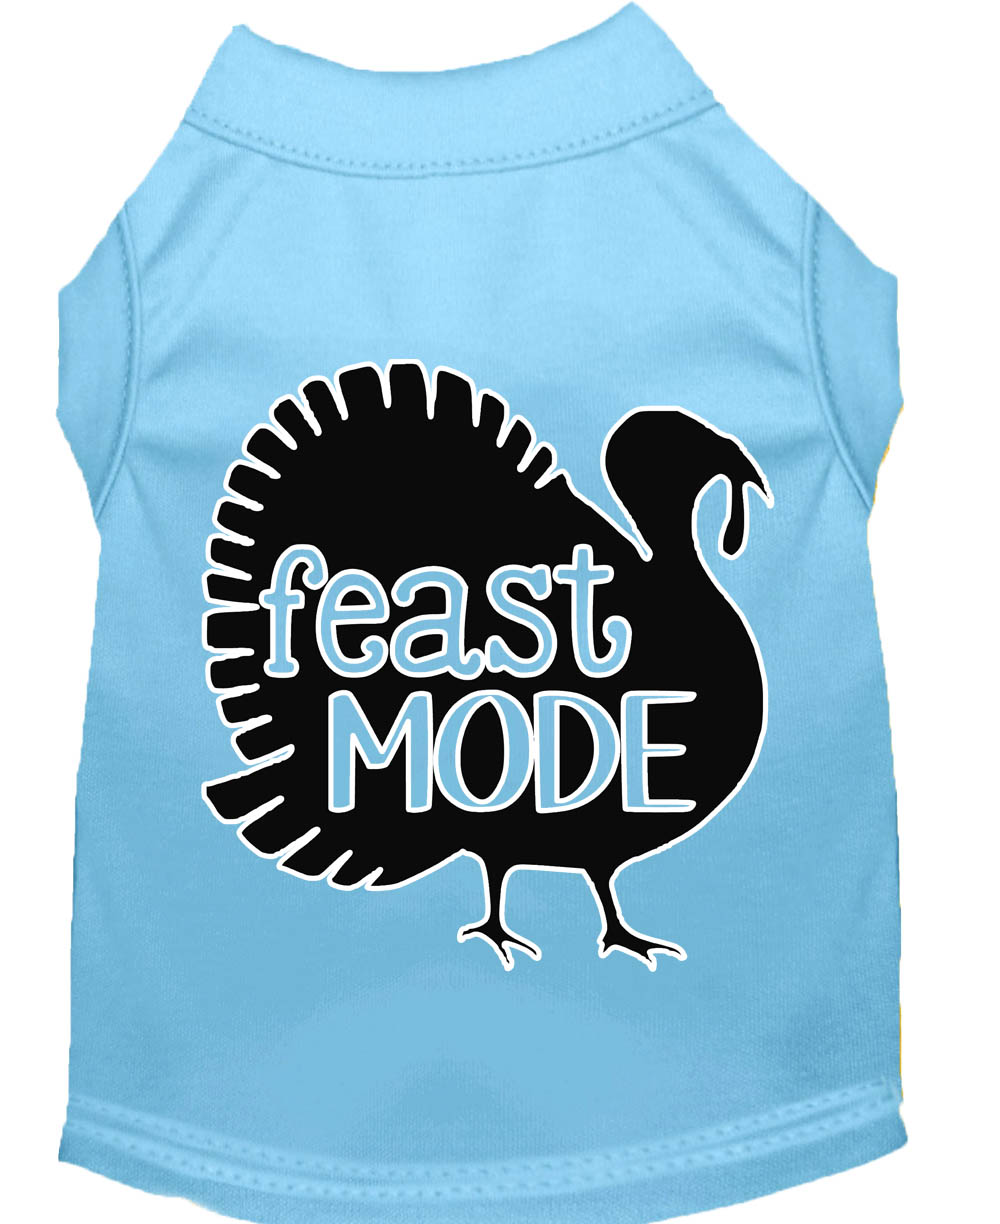 Feast Mode Screen Print Dog Shirt Baby Blue XS